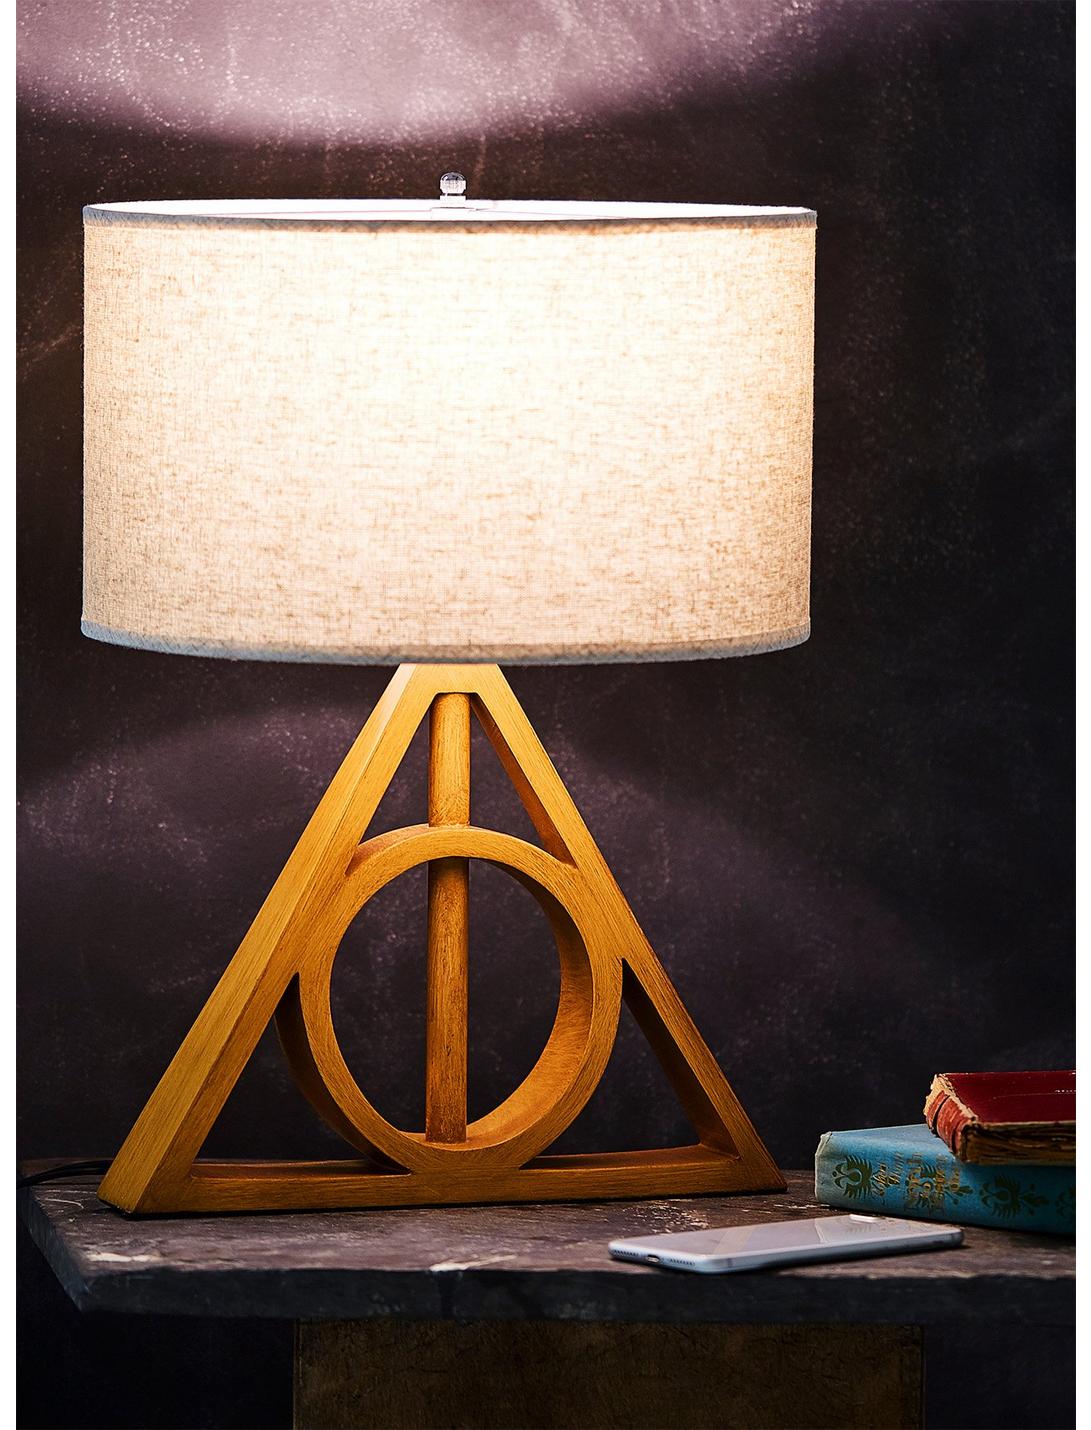 Harry Potter Deathly Hallows Novelty LED Desk Light 